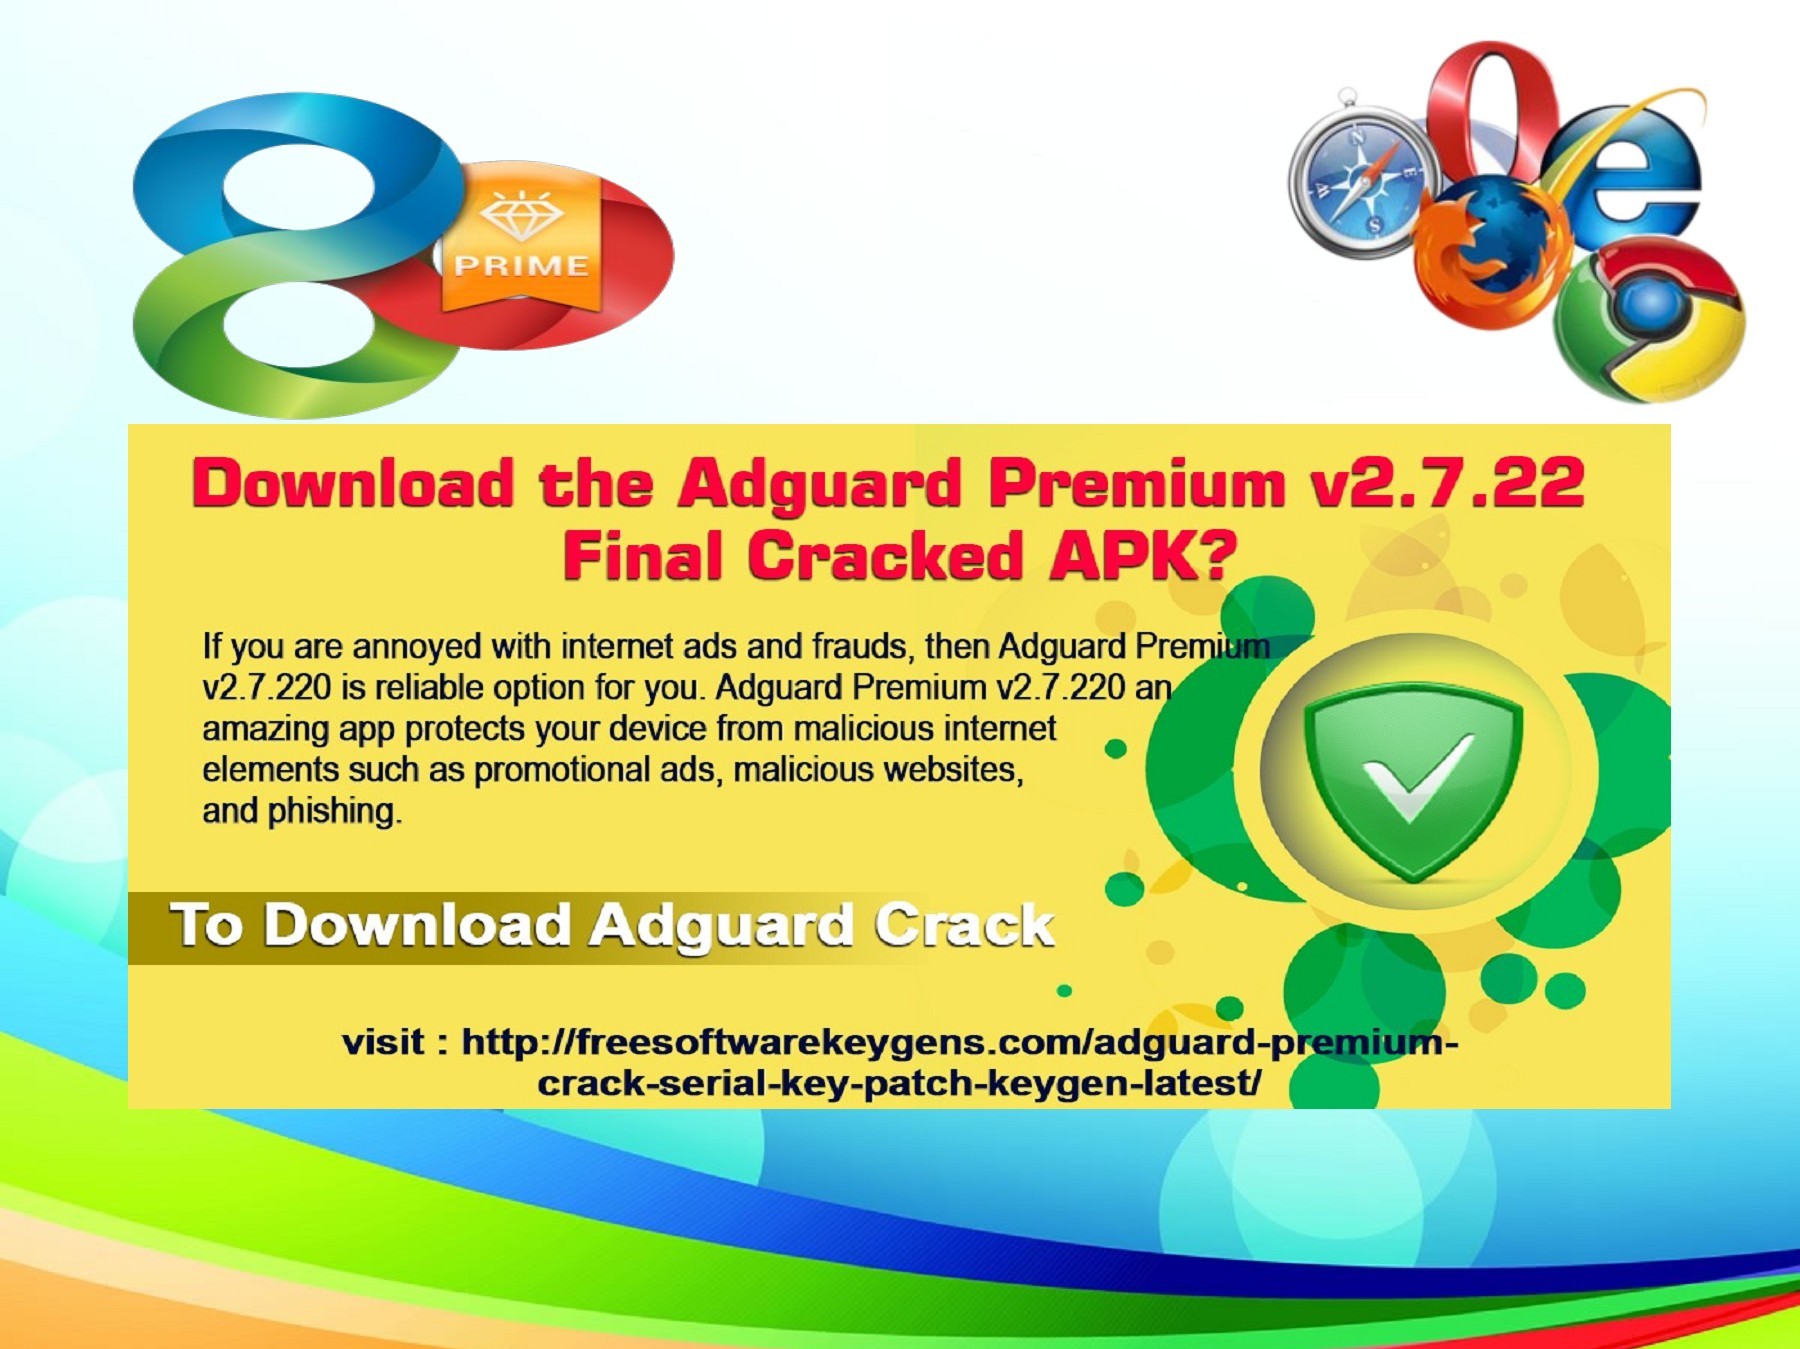 Download adguard crack windows 7